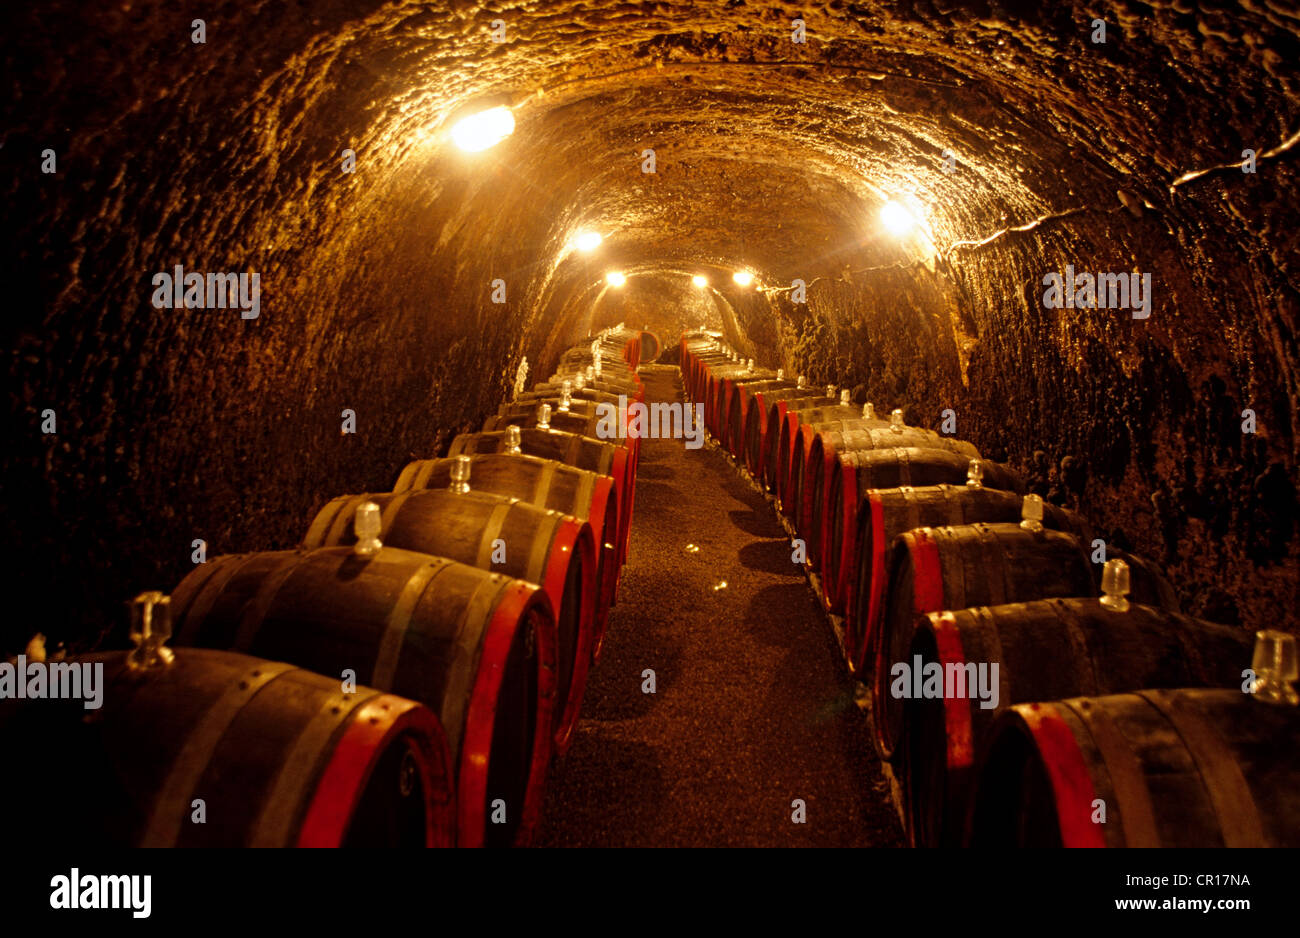 Hungary, Tokay (Tokaji), Dusoczky Wine producing domain, cellar and barrels Stock Photo